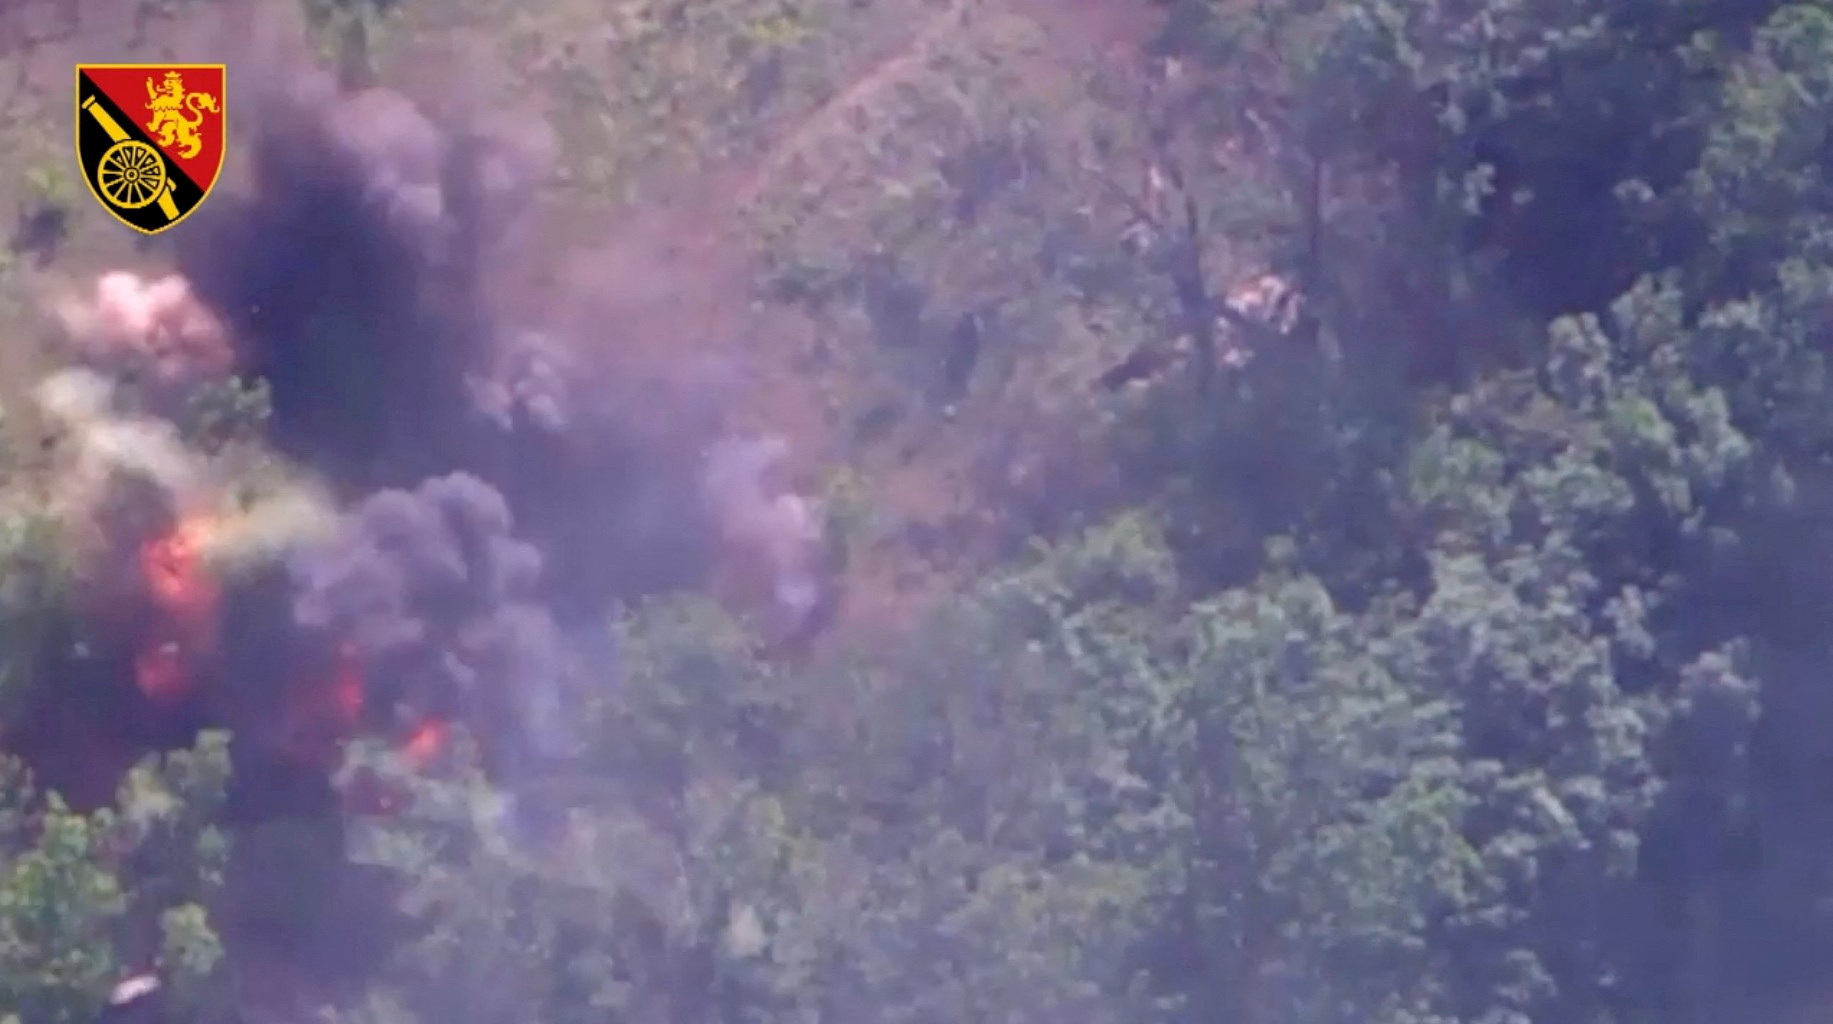 A view shows smoke rising as Ukrainian forces destroy Russian equipment near Bakhmut